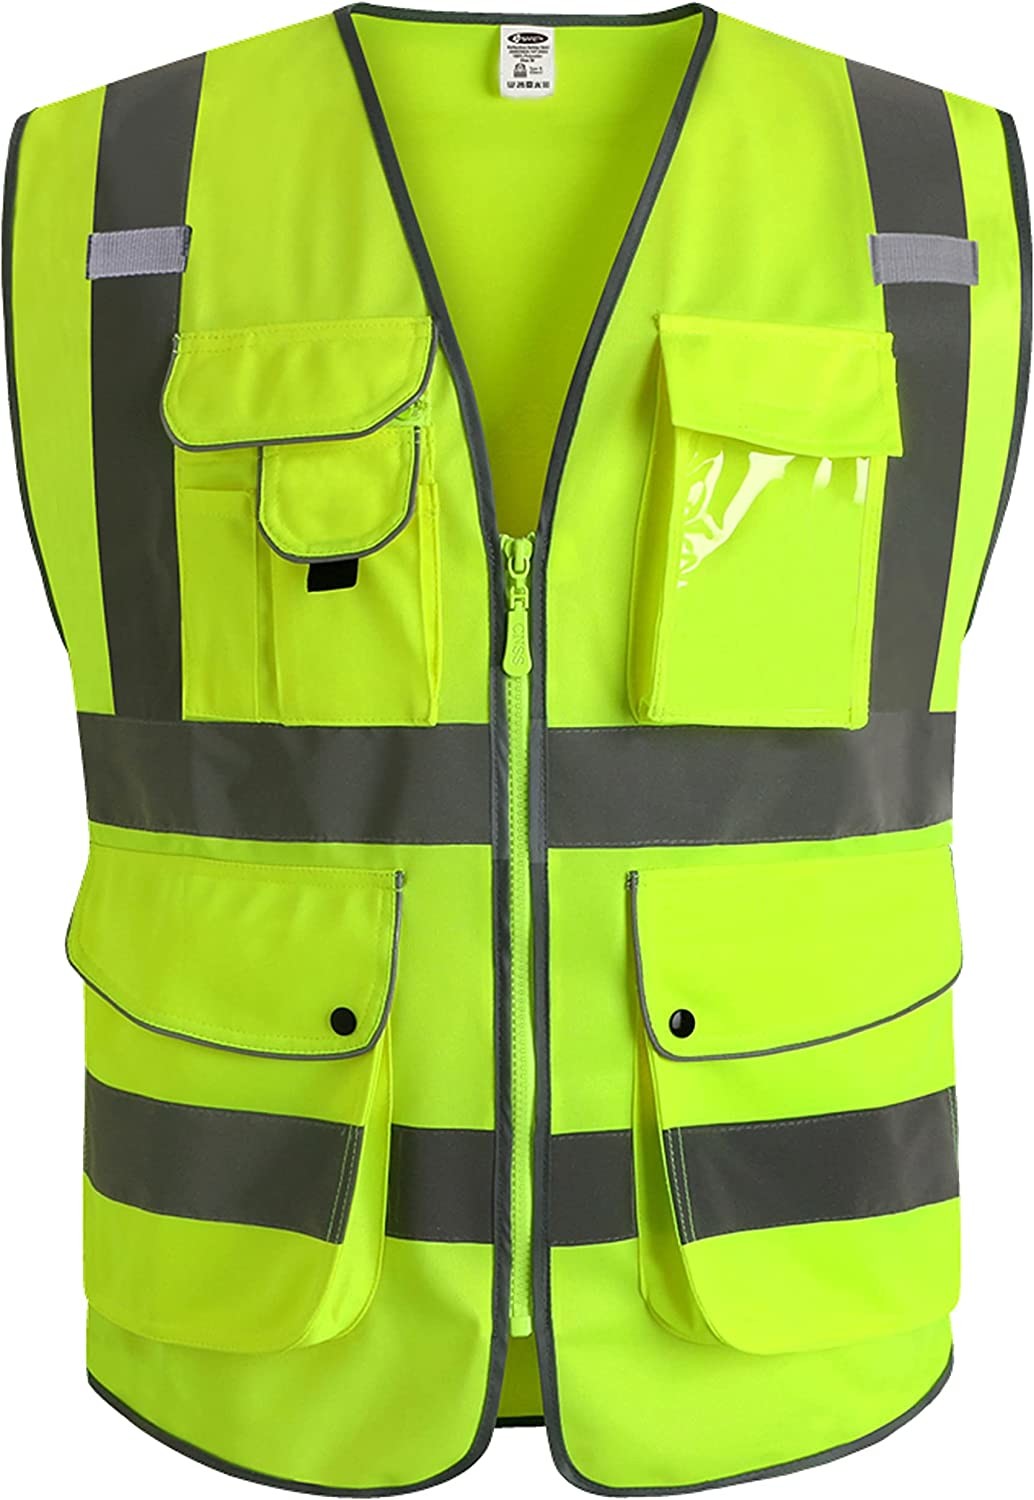 Quality Yellow Zipper Safety Hi Vis Waterproof Jacket Waterproof ISEA Class 2 S M L for sale